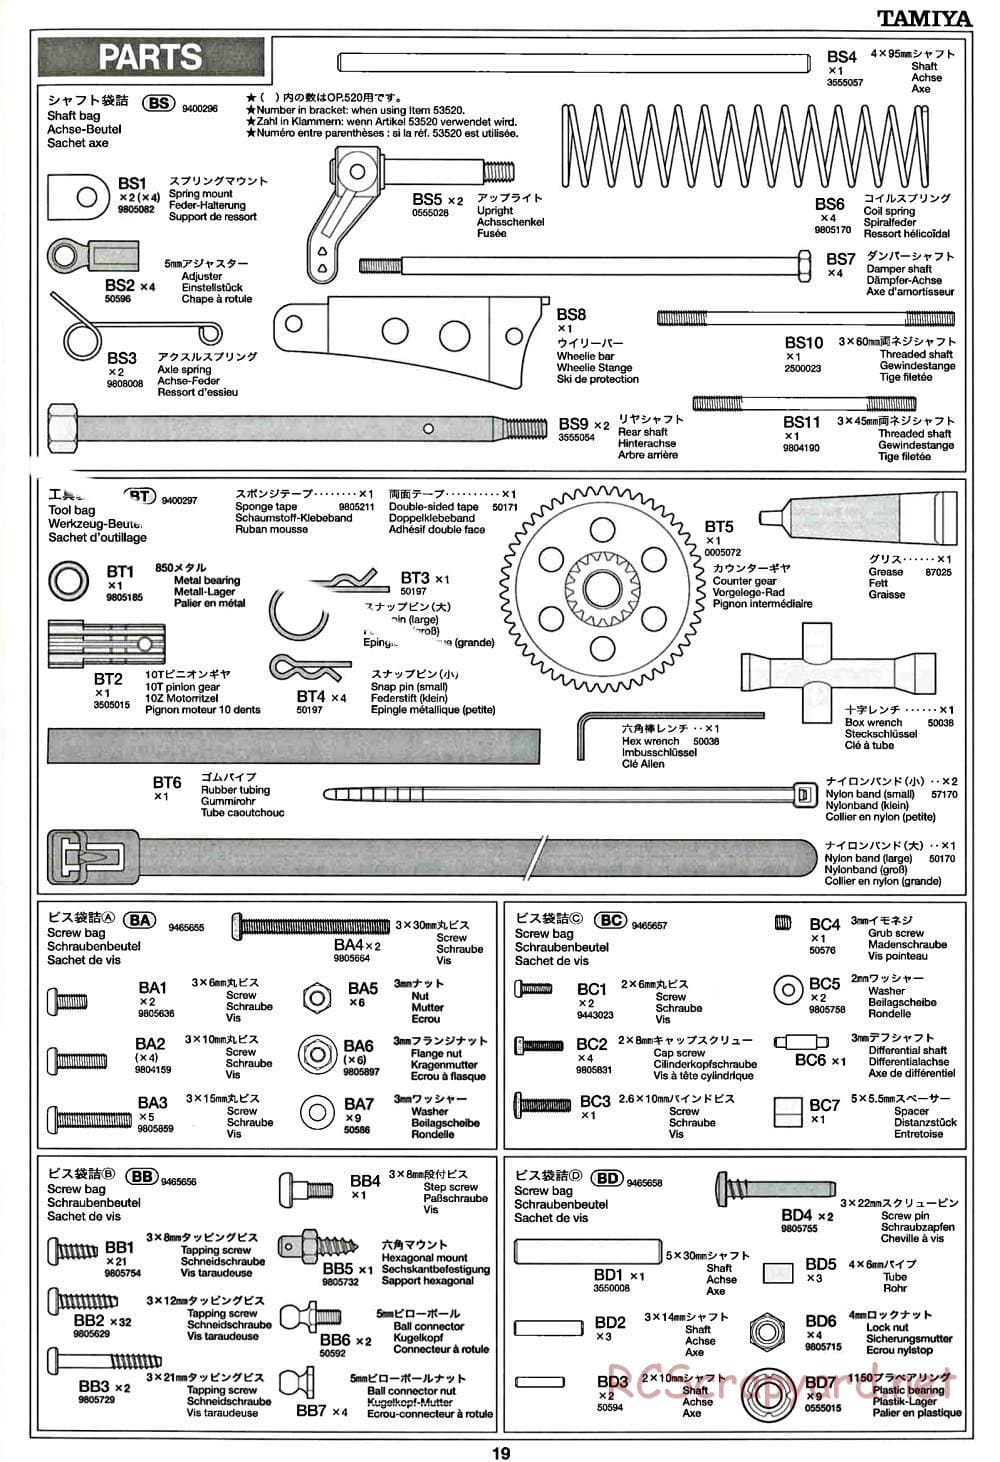 Tamiya - CW-01 Chassis - Manual - Page 19